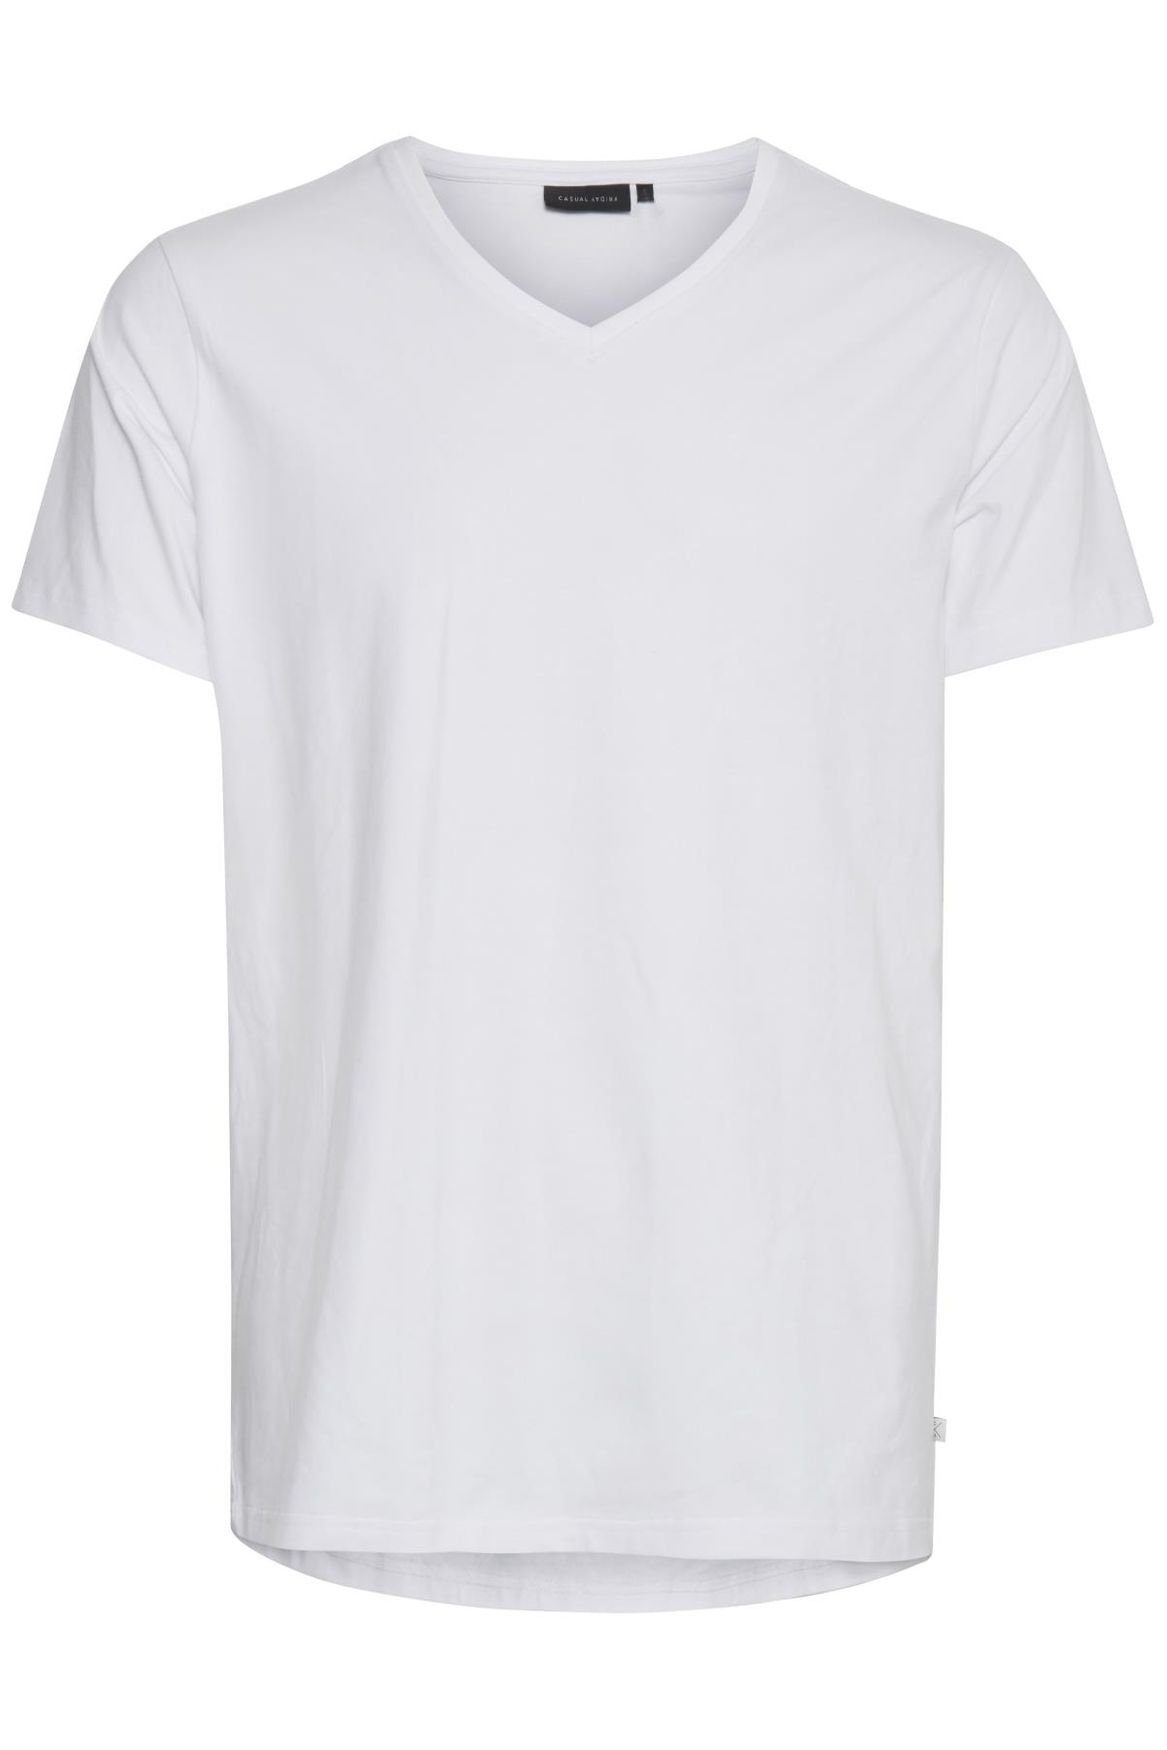 T-Shirt in Casual Friday V-Ausschnitt T-Shirt Weiß LINCOLN Einfarbiges 4458 Kurzarm Basic